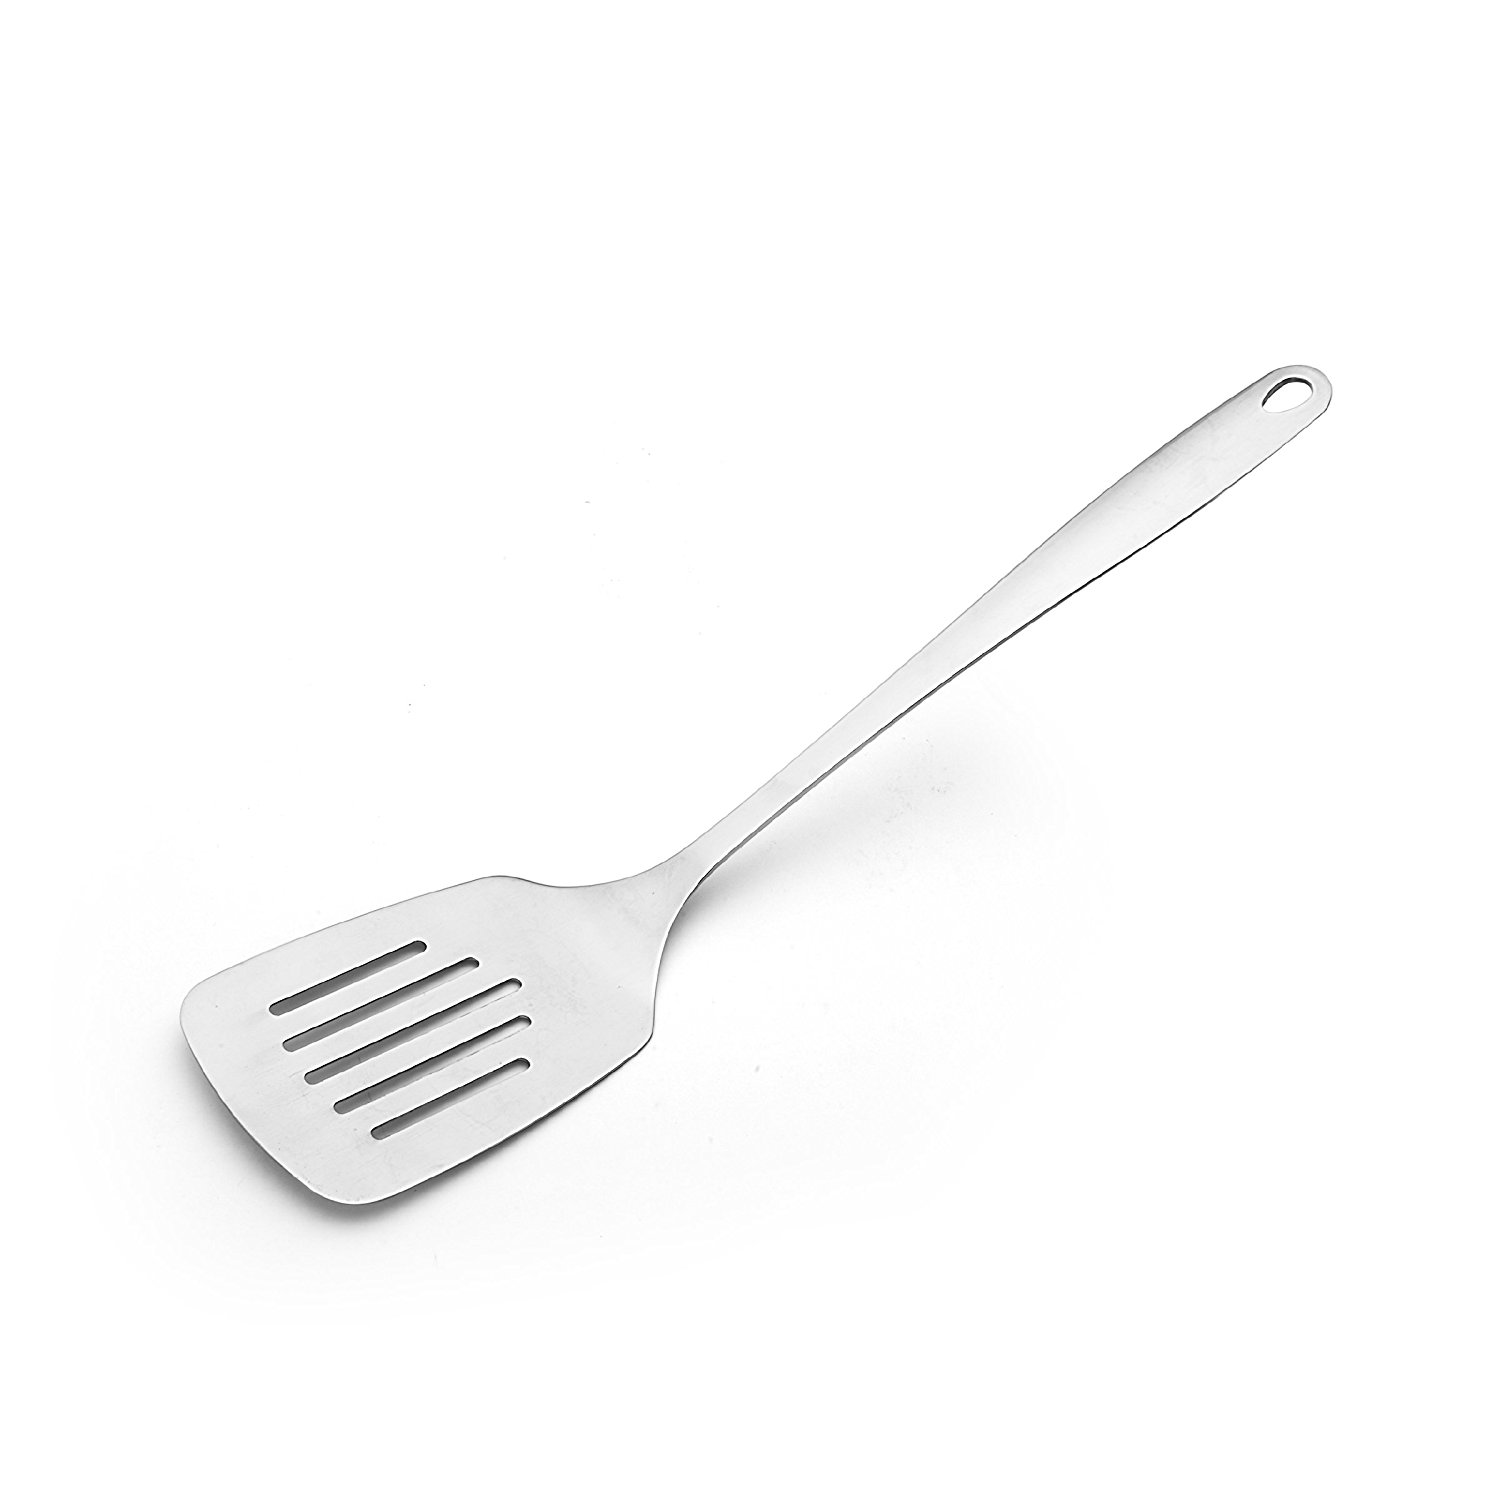 A photo of a spatula